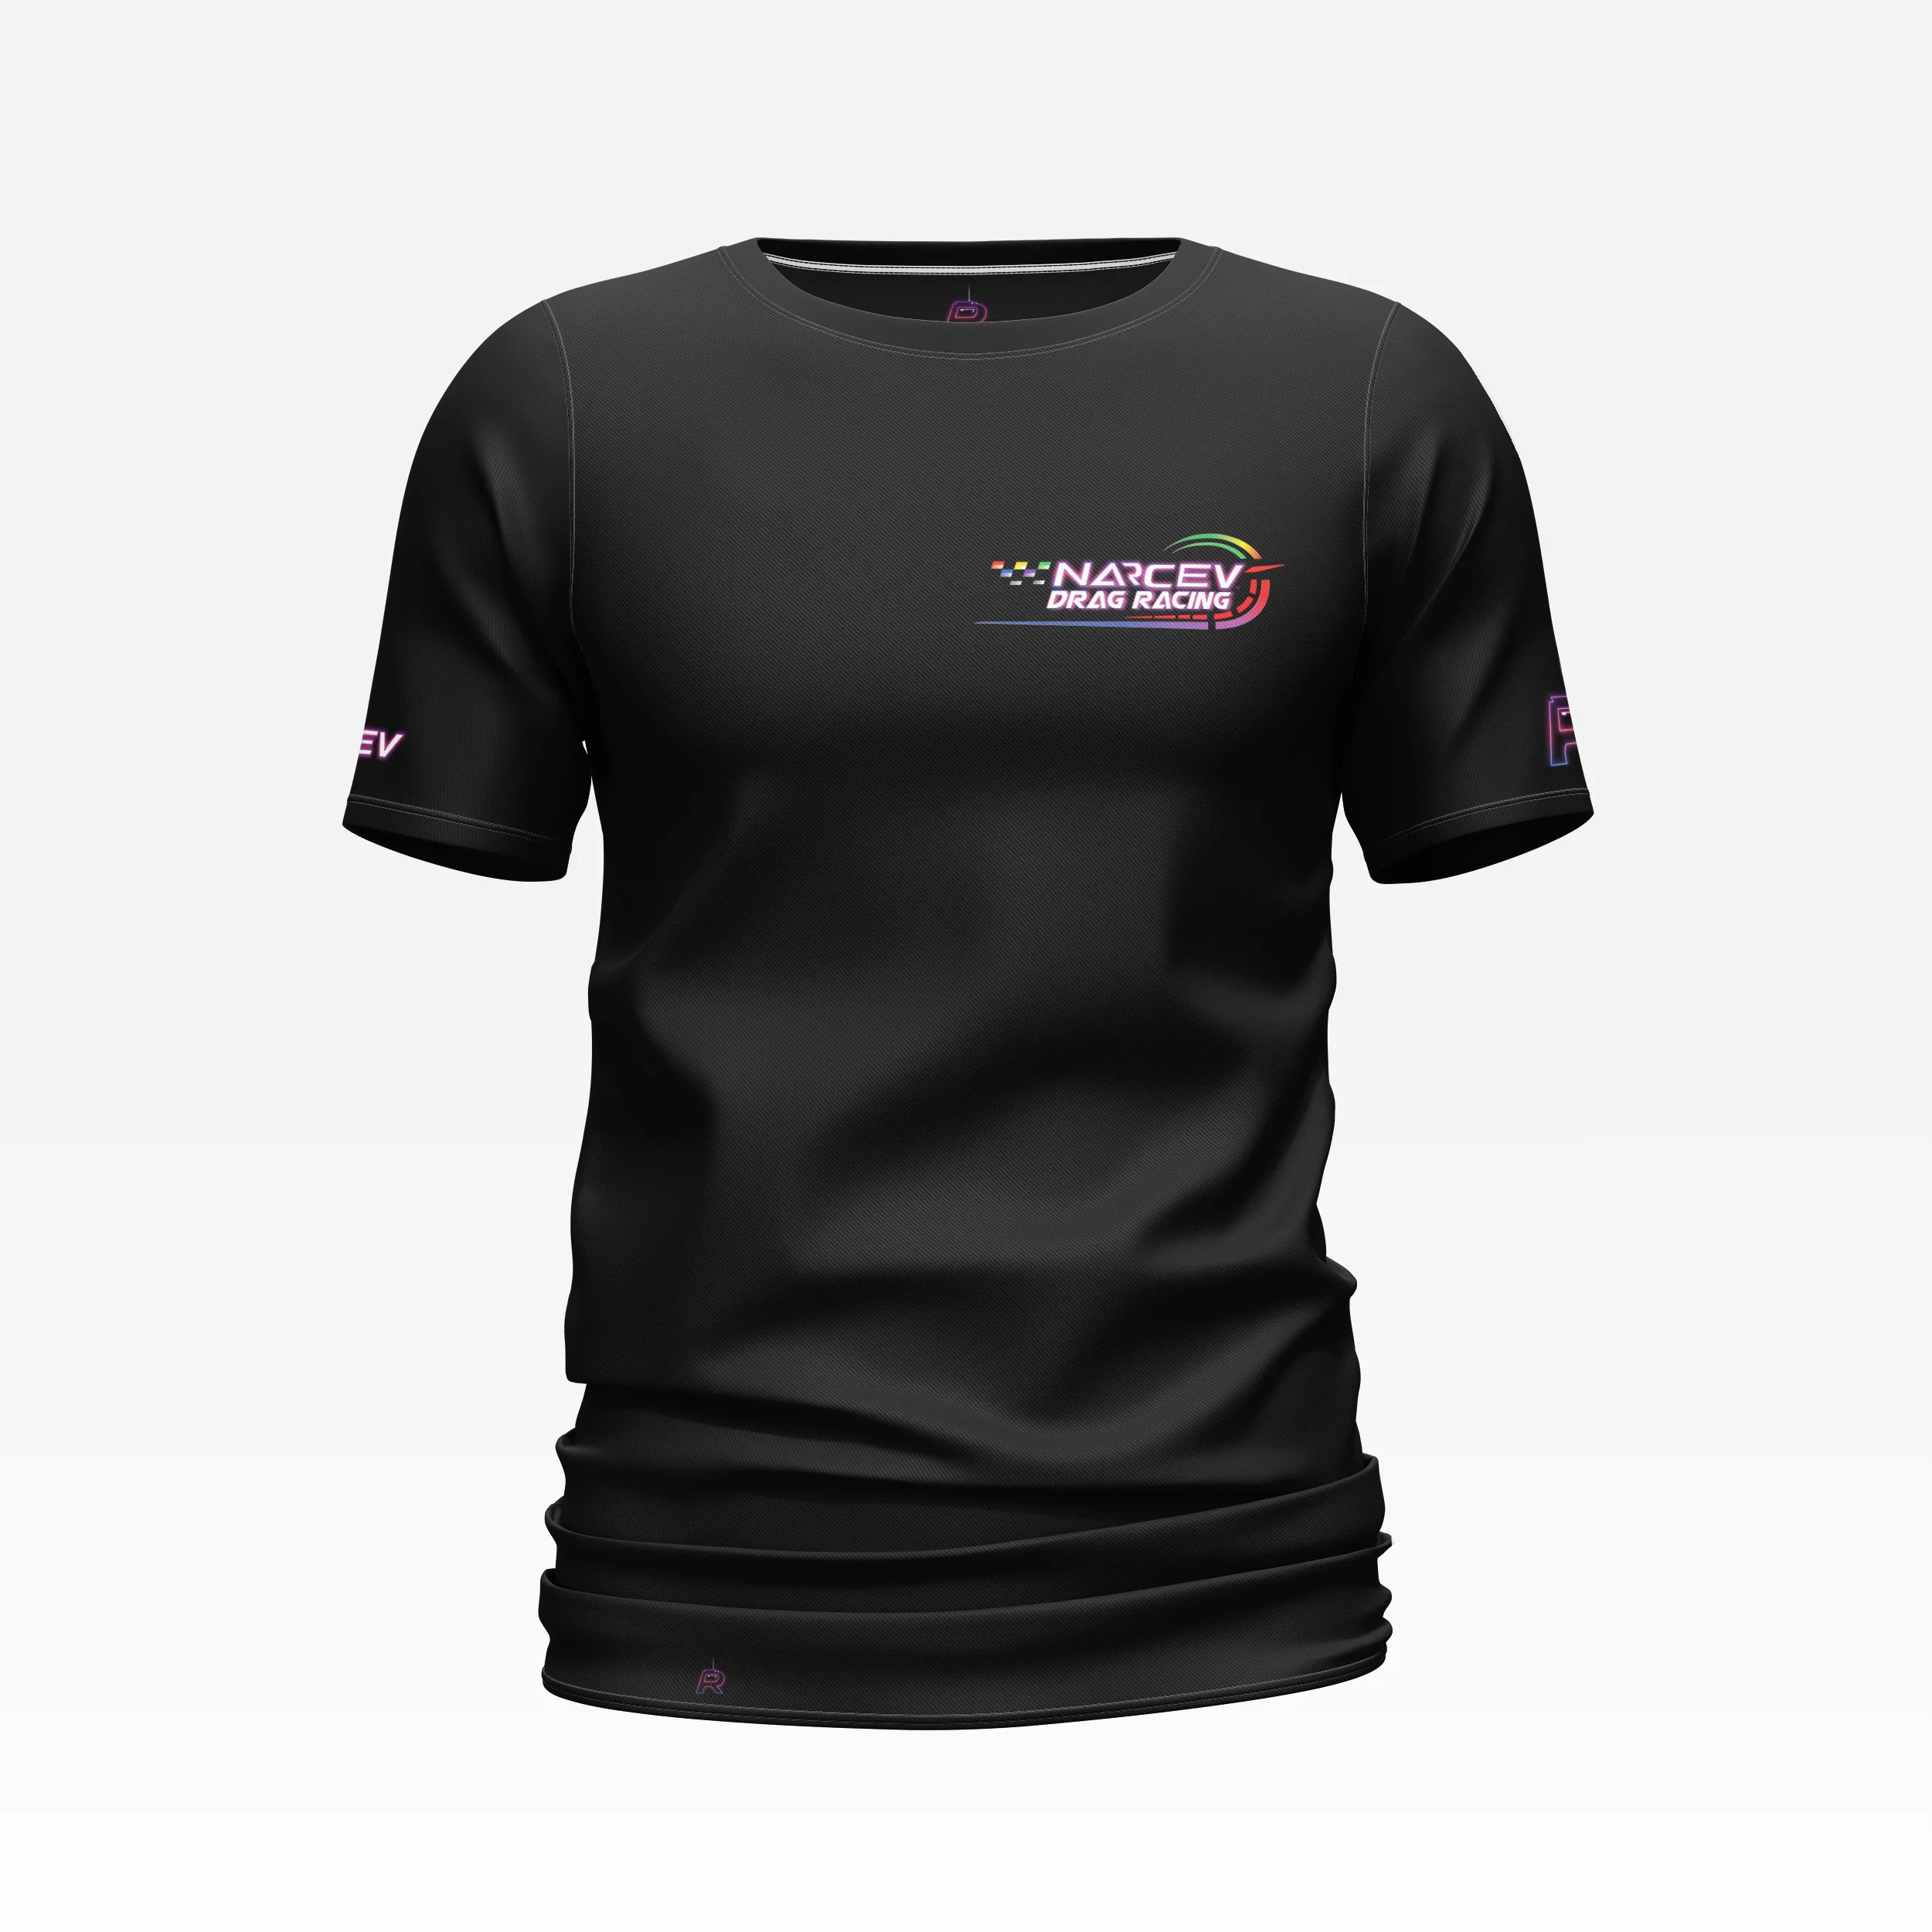 Narcev_drag_racing_t-shirt_black